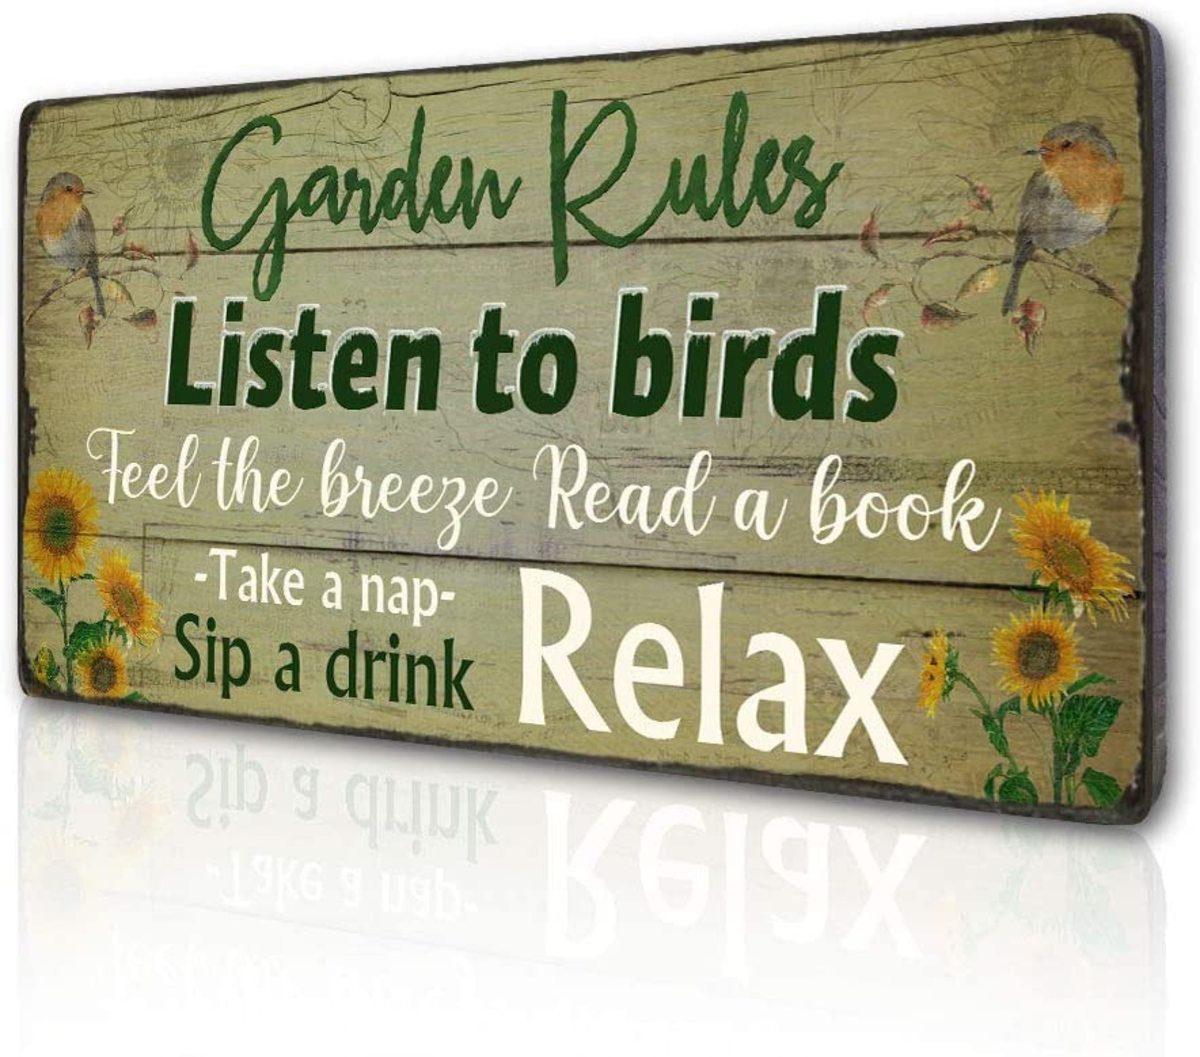 Enjoy your bird-friendly garden.